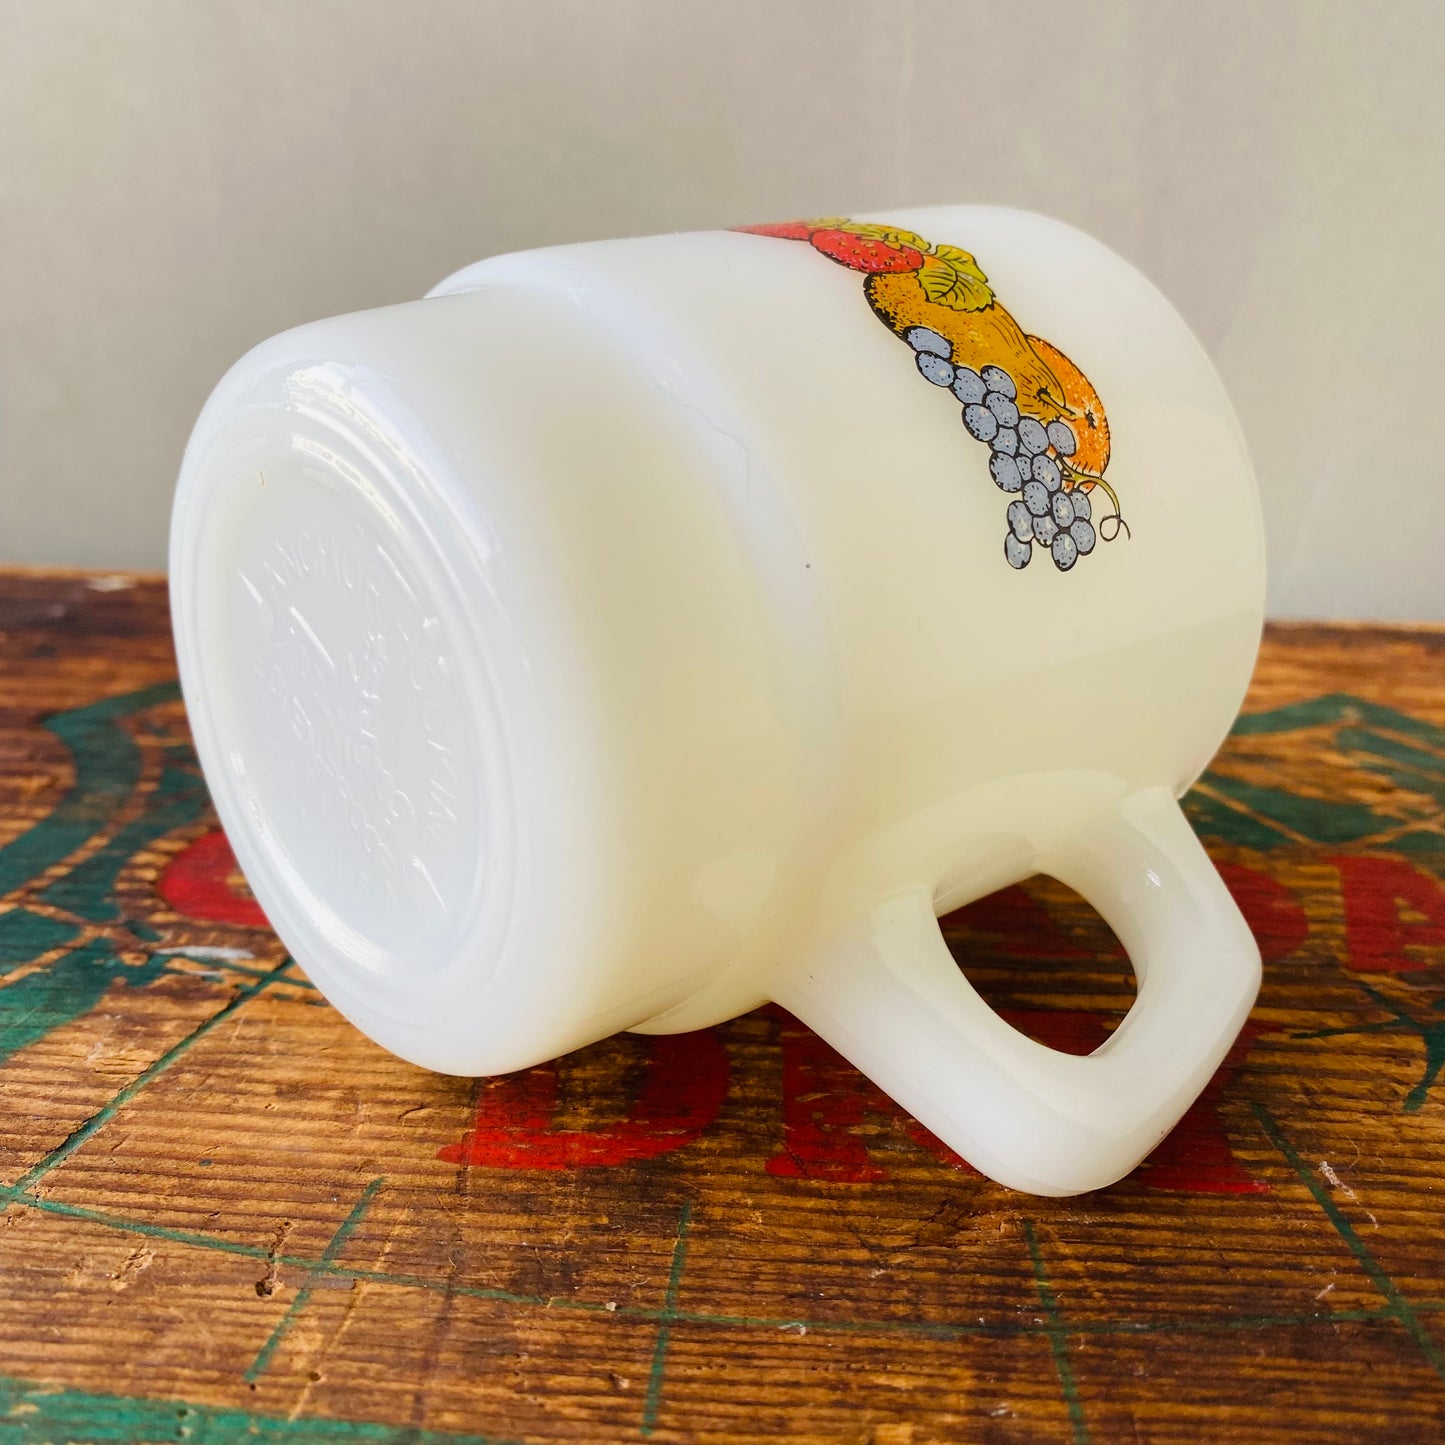 【1960-1976】Fire-King NATURE'S BOUNTY mug